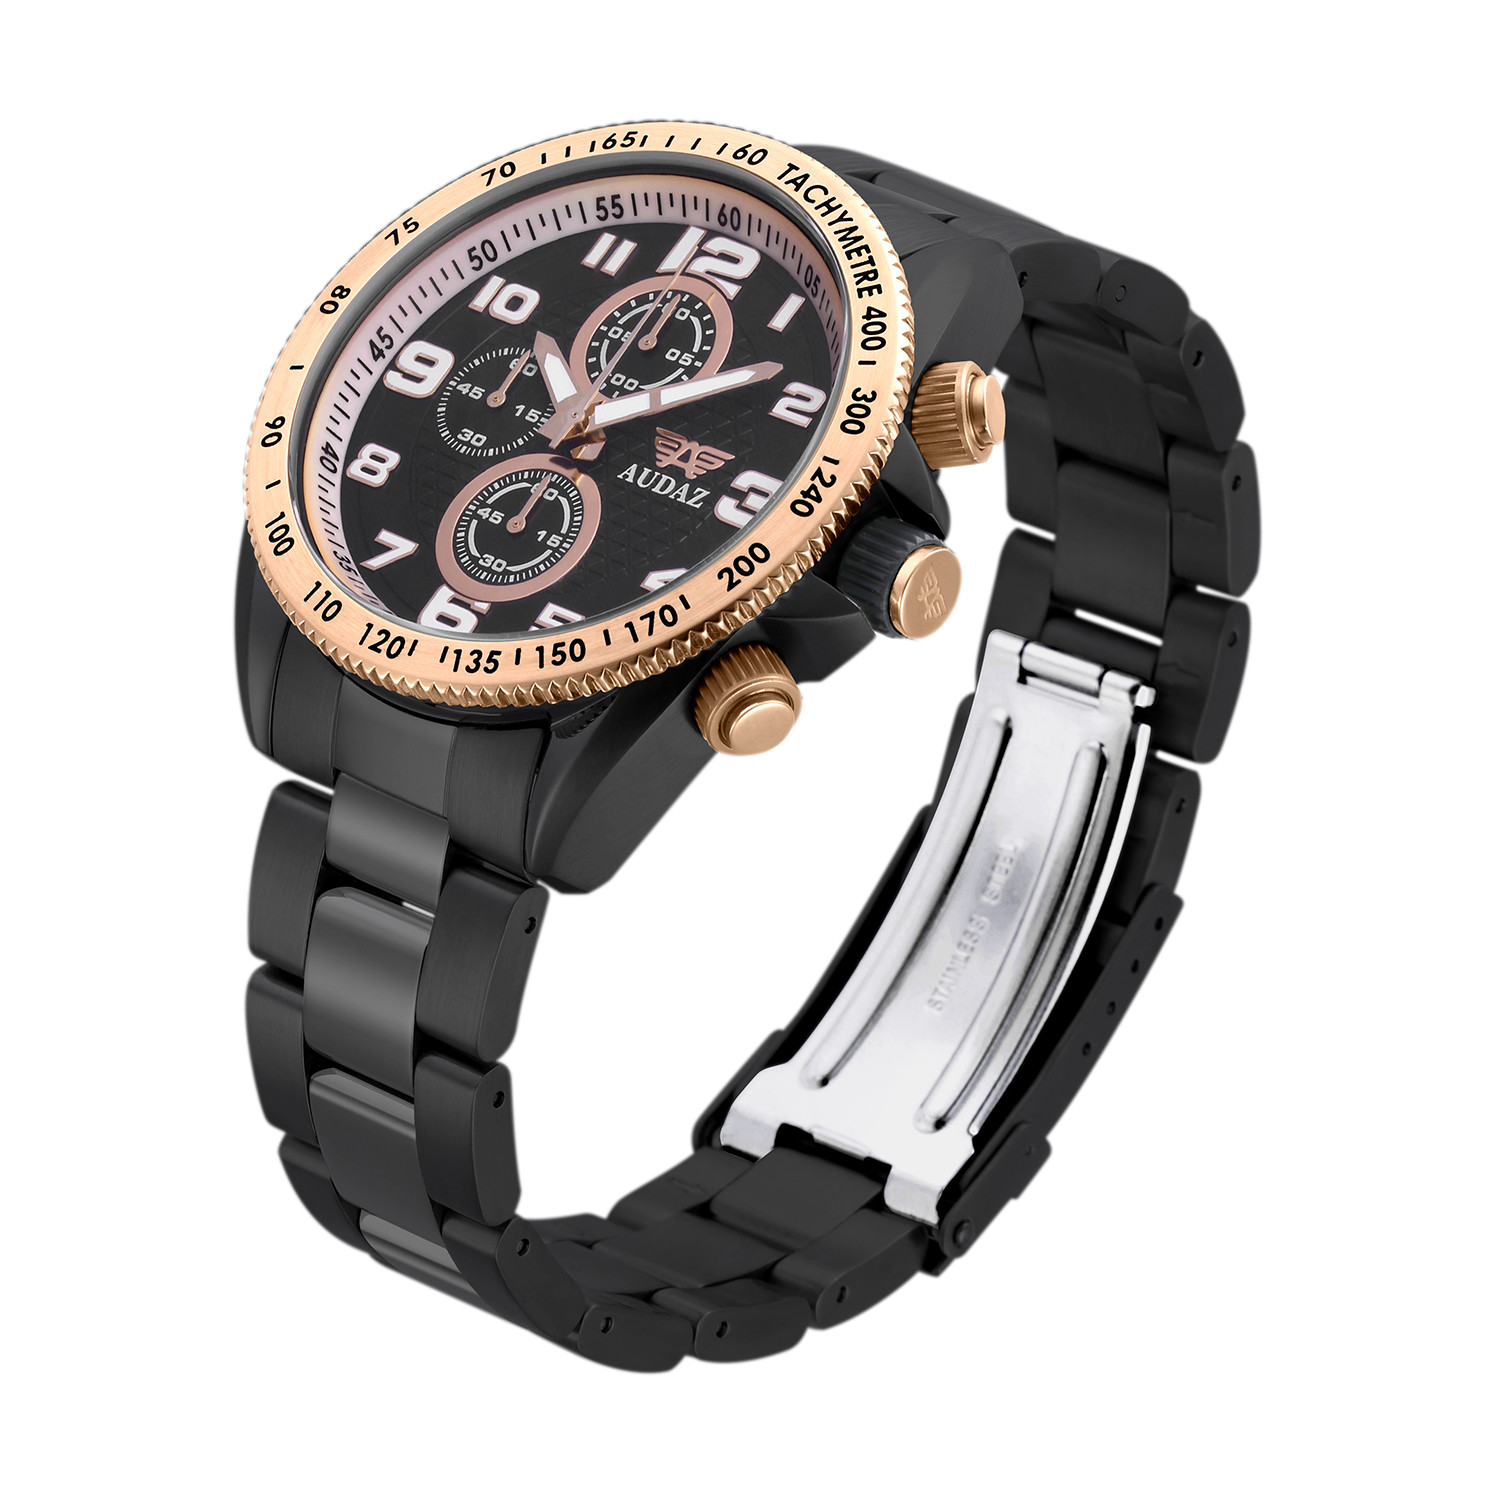 Audaz Sprinter Men's Diver Watch 45mm Rose Gold Plated Fixed Bezel Quartz Chronograph ADZ-2025-04